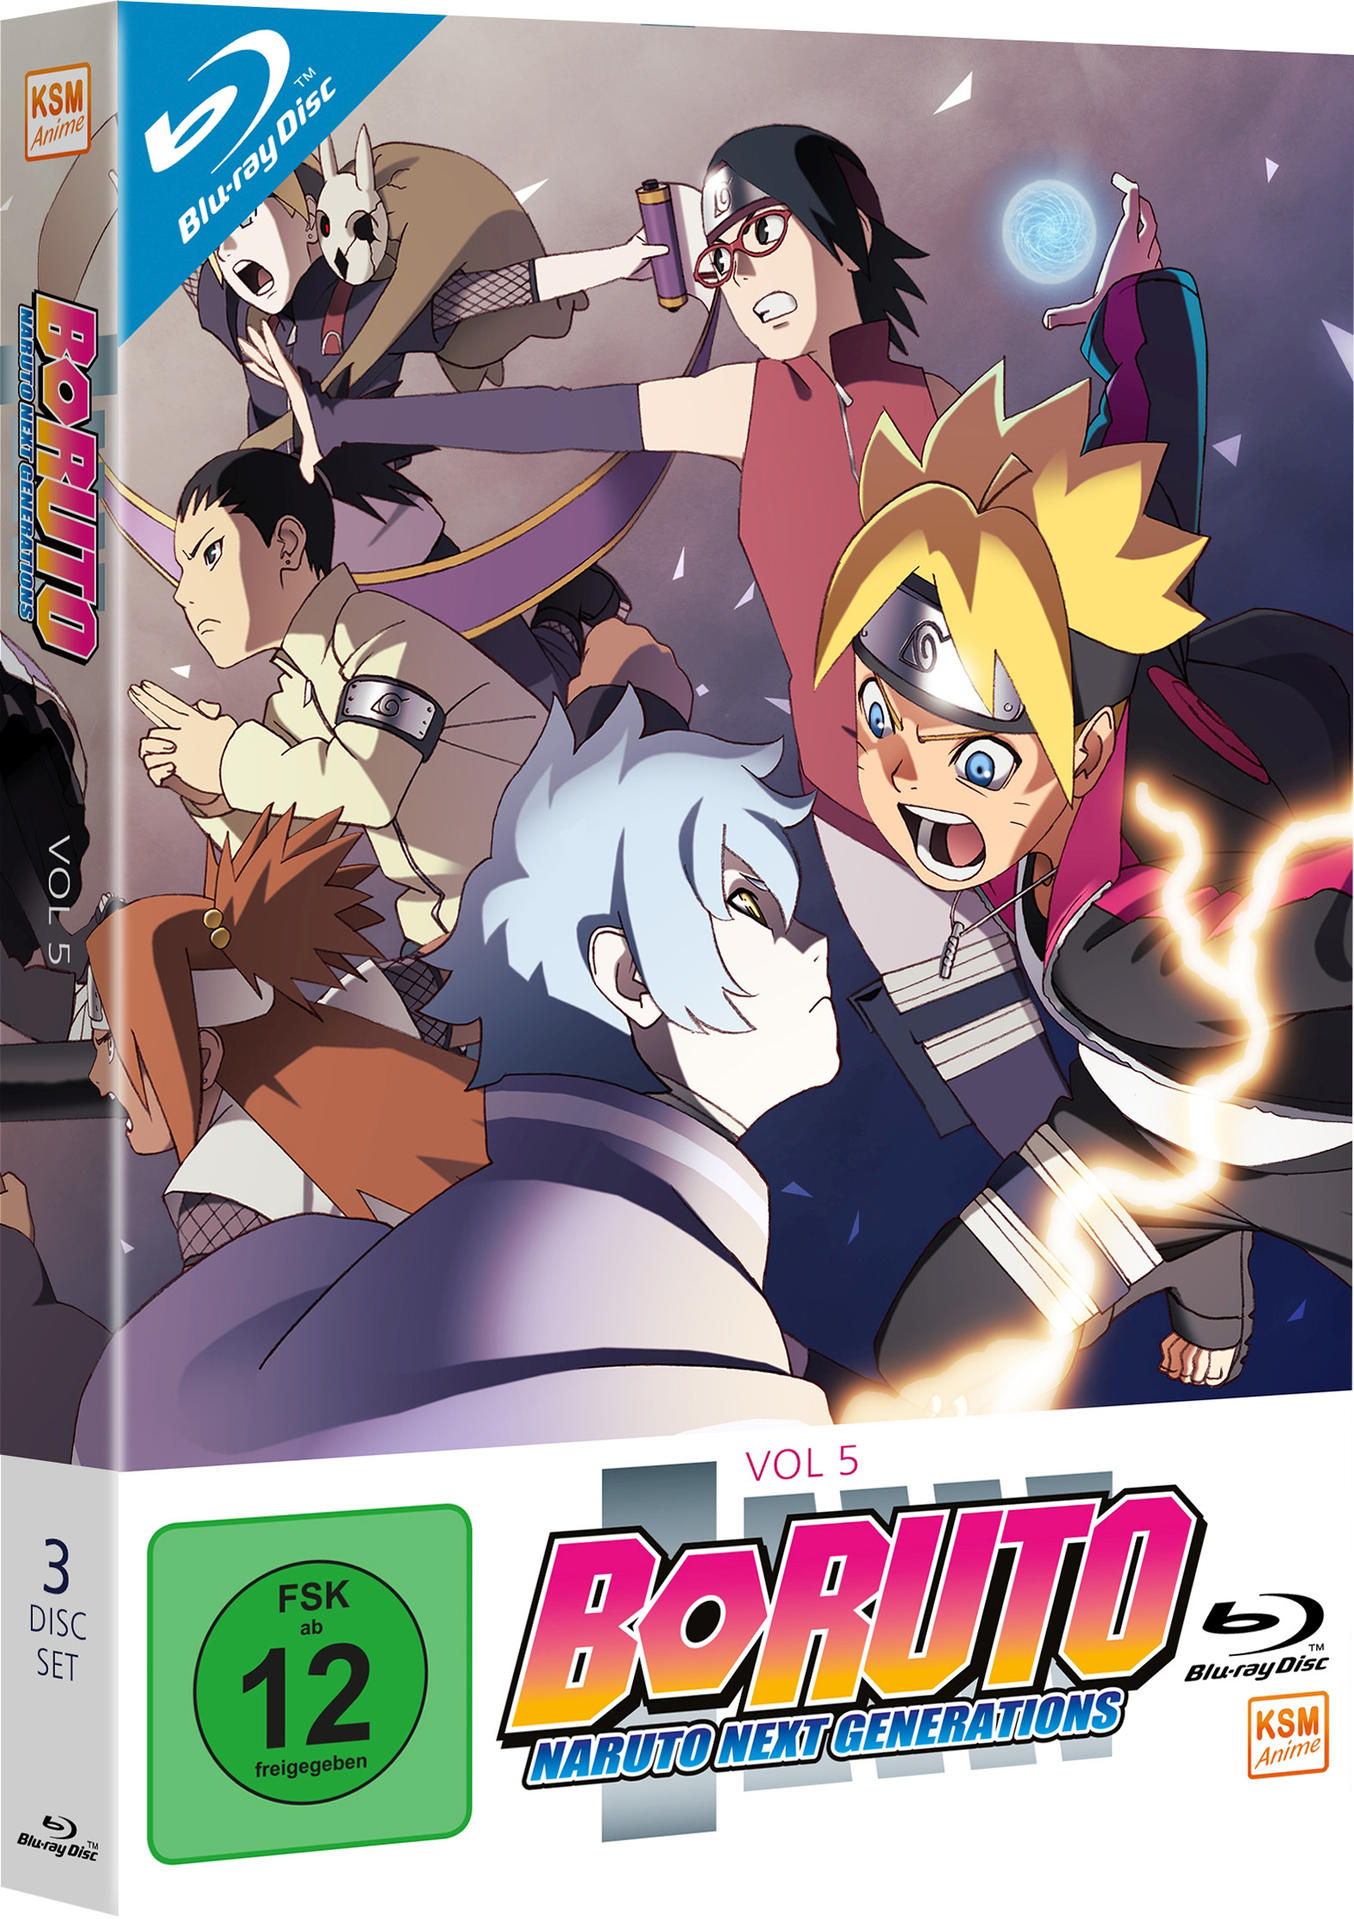 Boruto: Naruto Volume 5 Generations 71-92) - Blu-ray Next (Episode